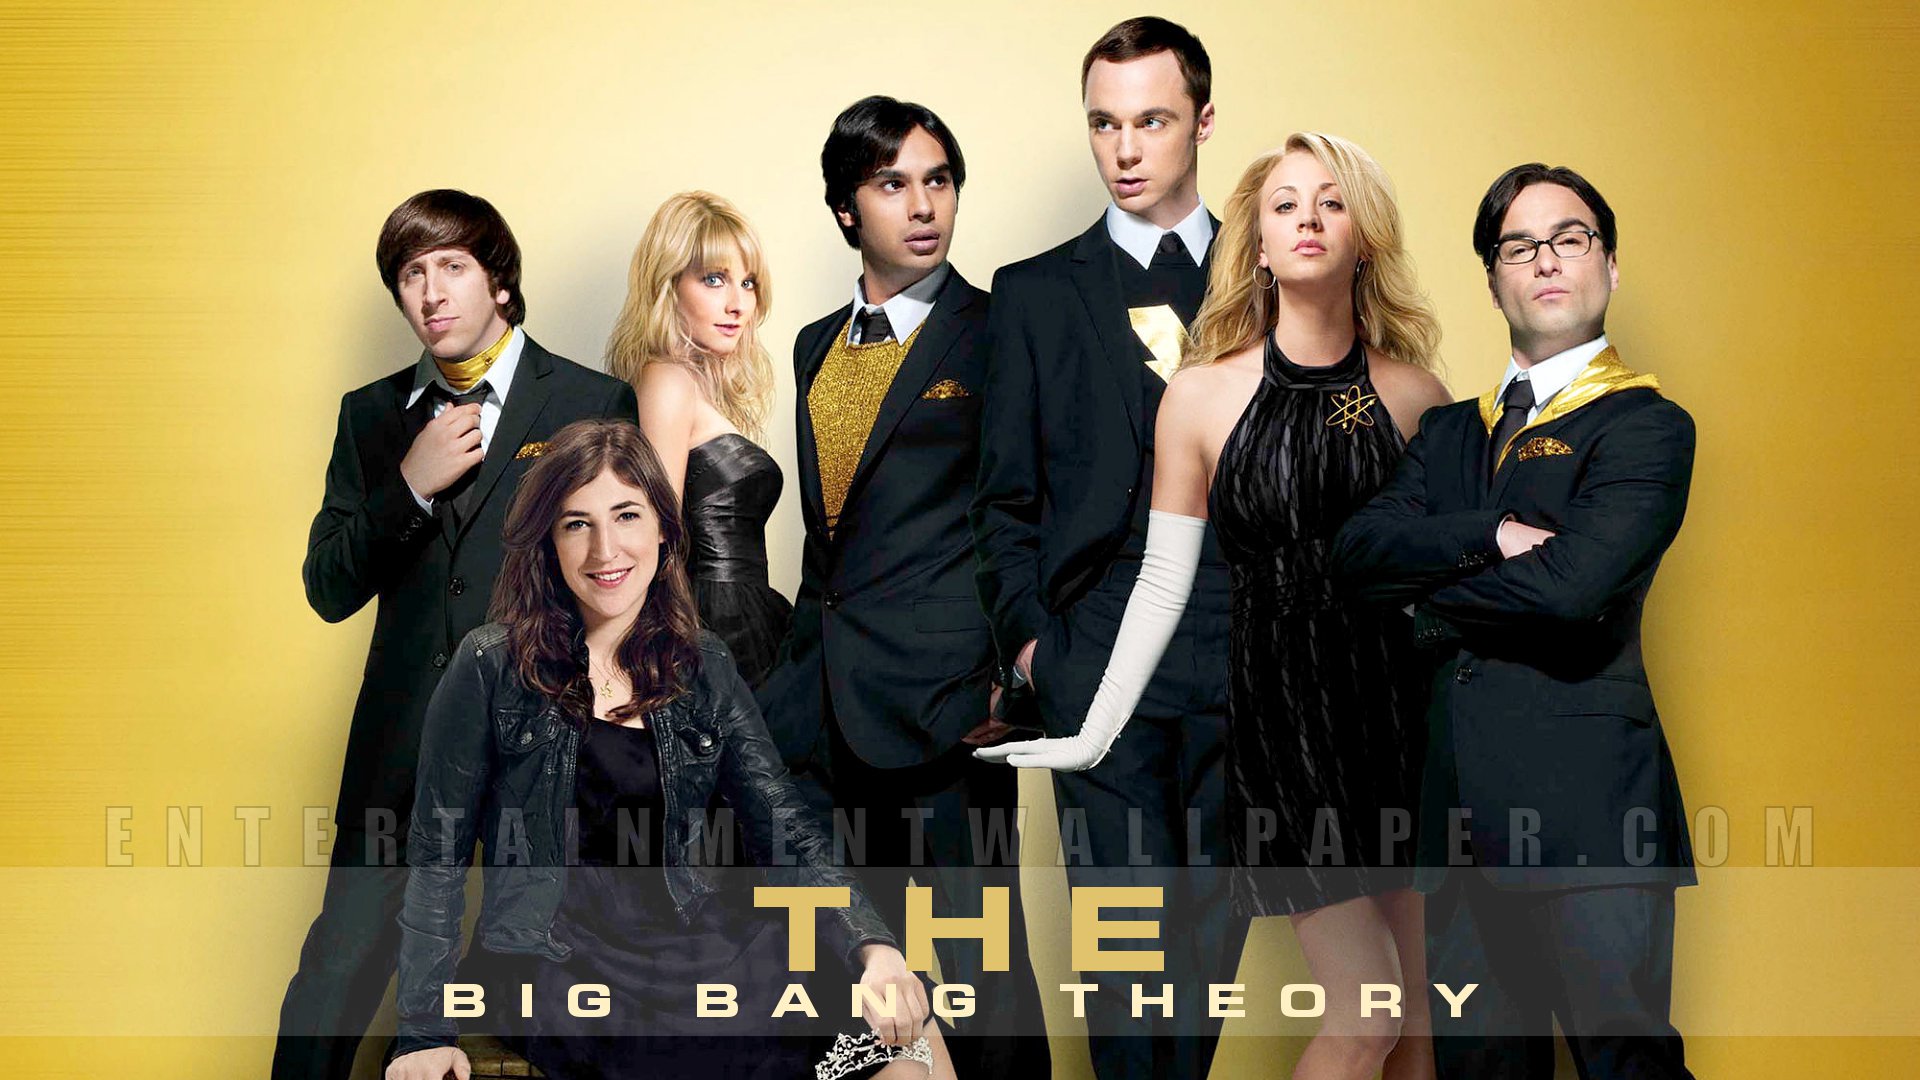 The Big Bang Theory Wallpaper - Original size, download now.